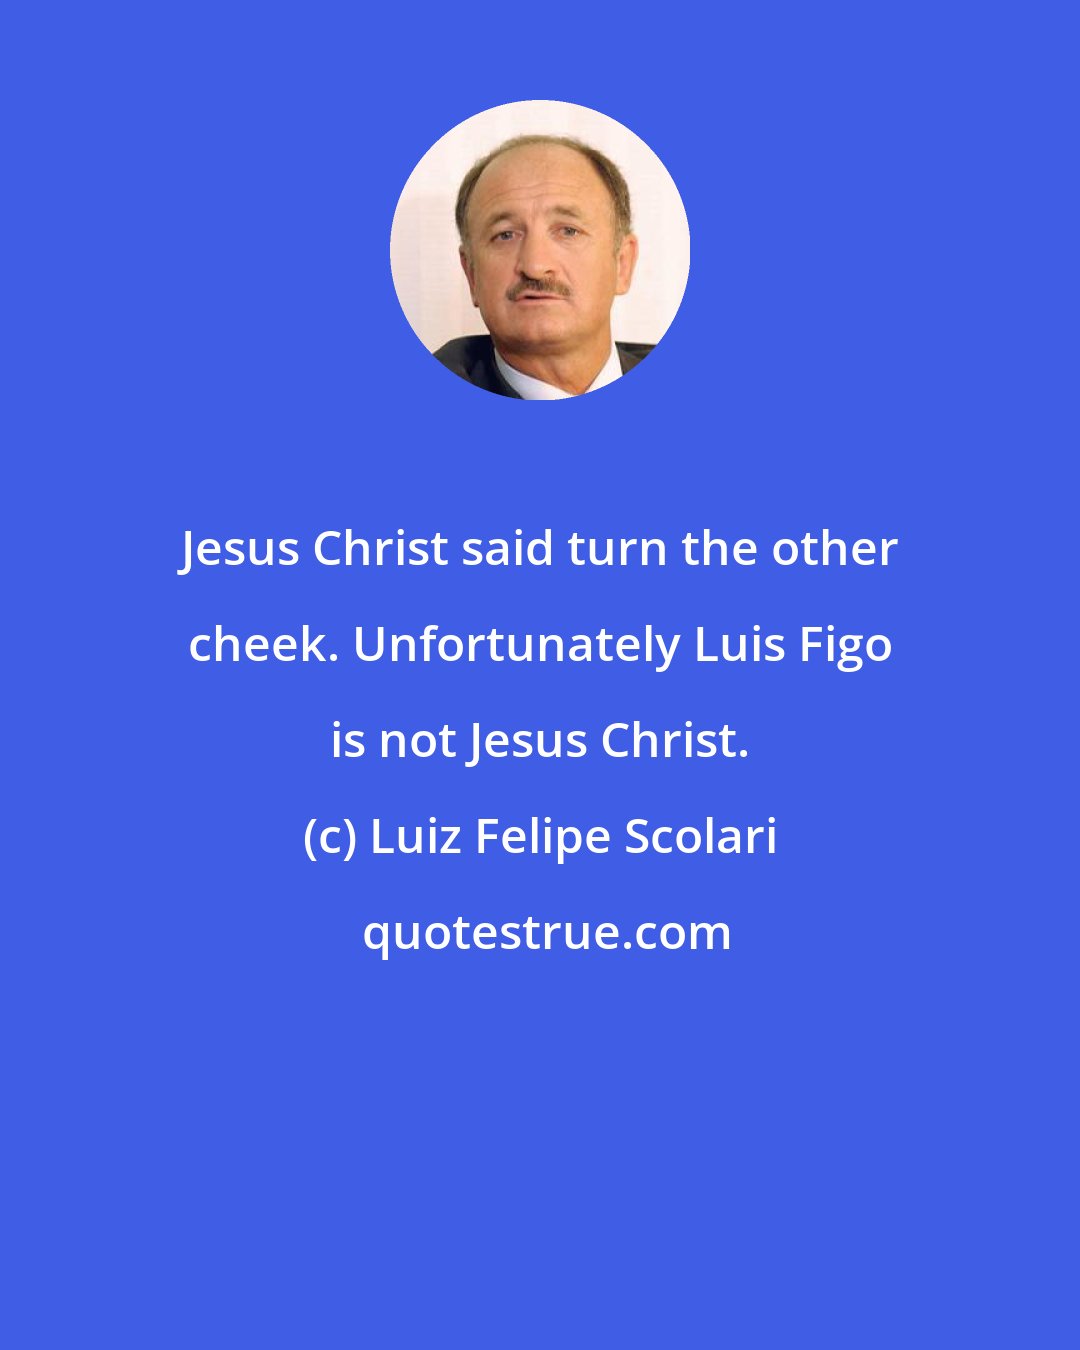 Luiz Felipe Scolari: Jesus Christ said turn the other cheek. Unfortunately Luis Figo is not Jesus Christ.